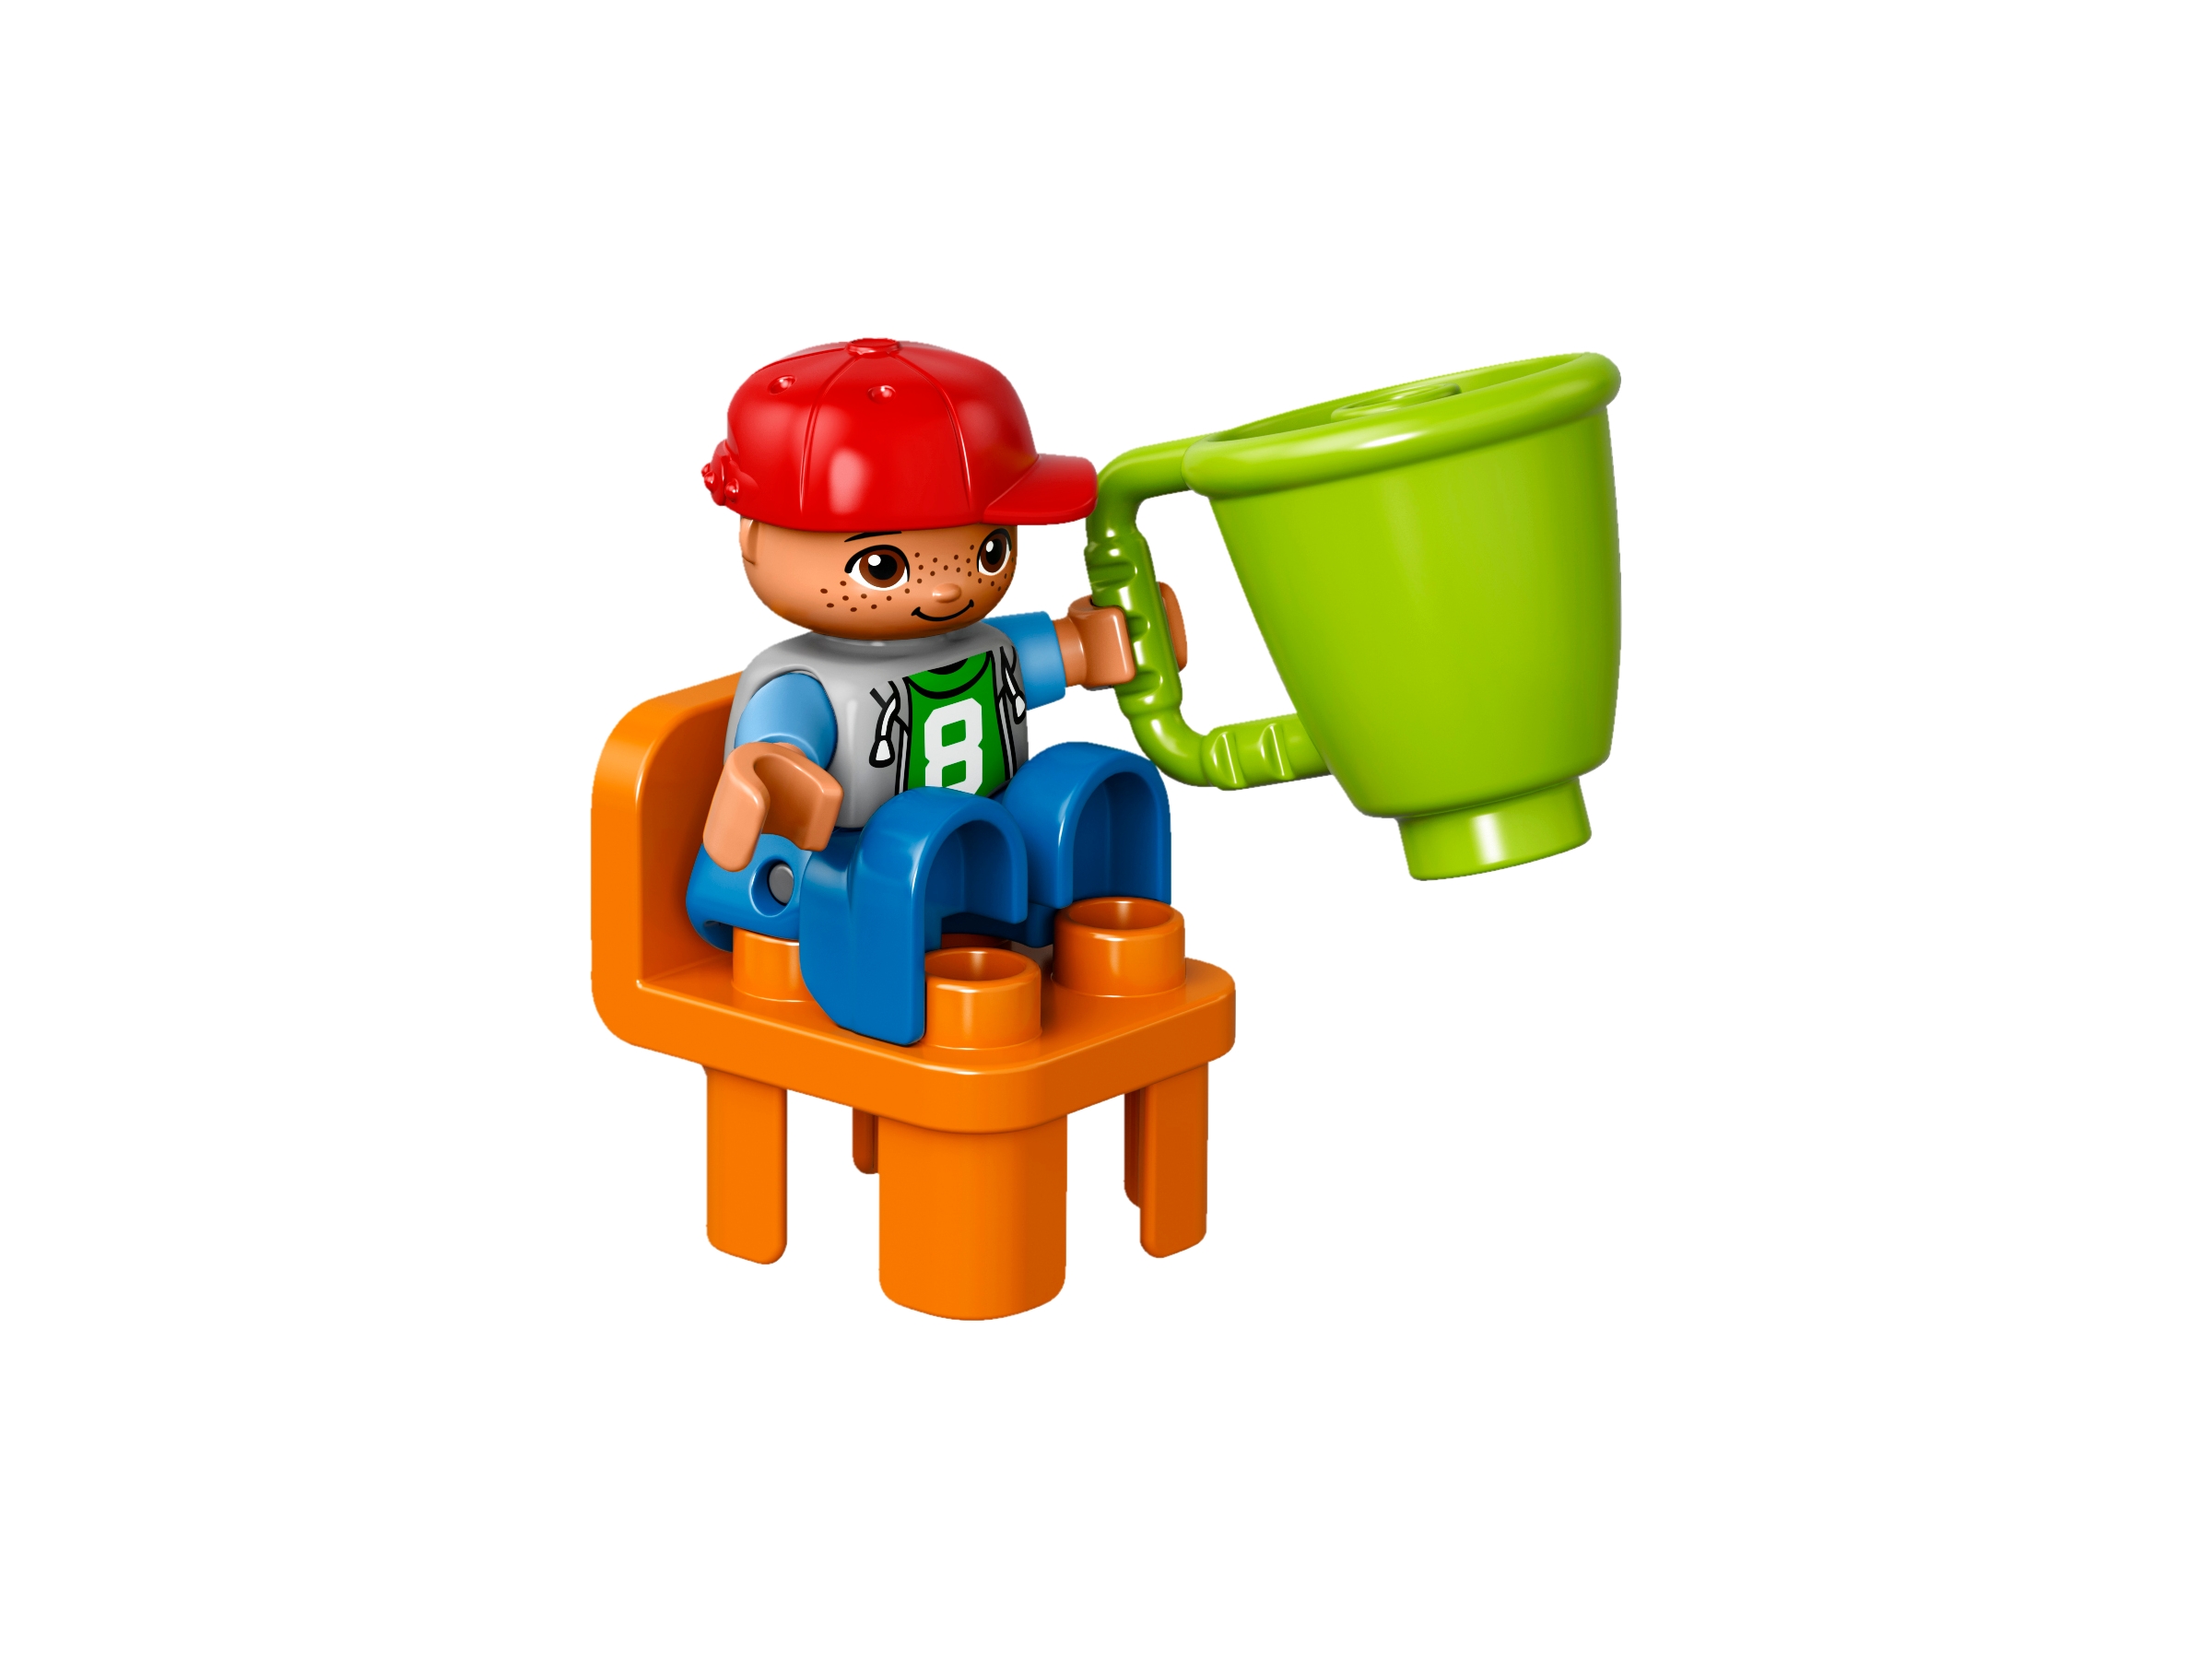 LEGO DUPLO Nursery School Set 10833 My Town with Duplo Figures New Boxed Set 